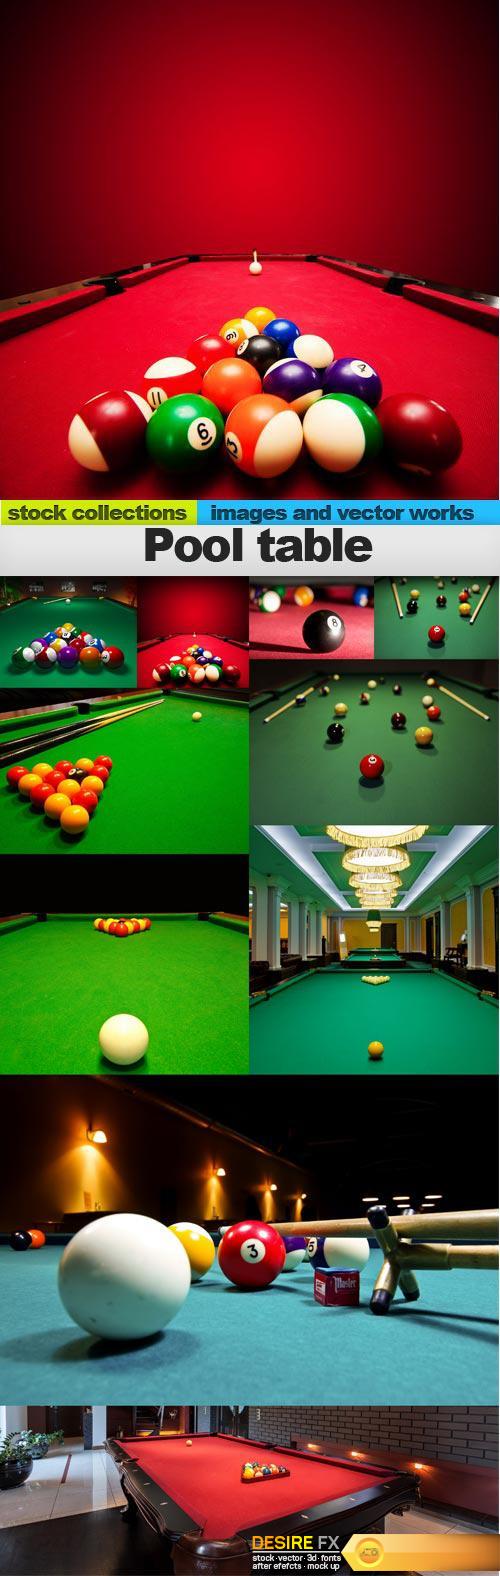 Pool table, 10 x UHQ JPEG